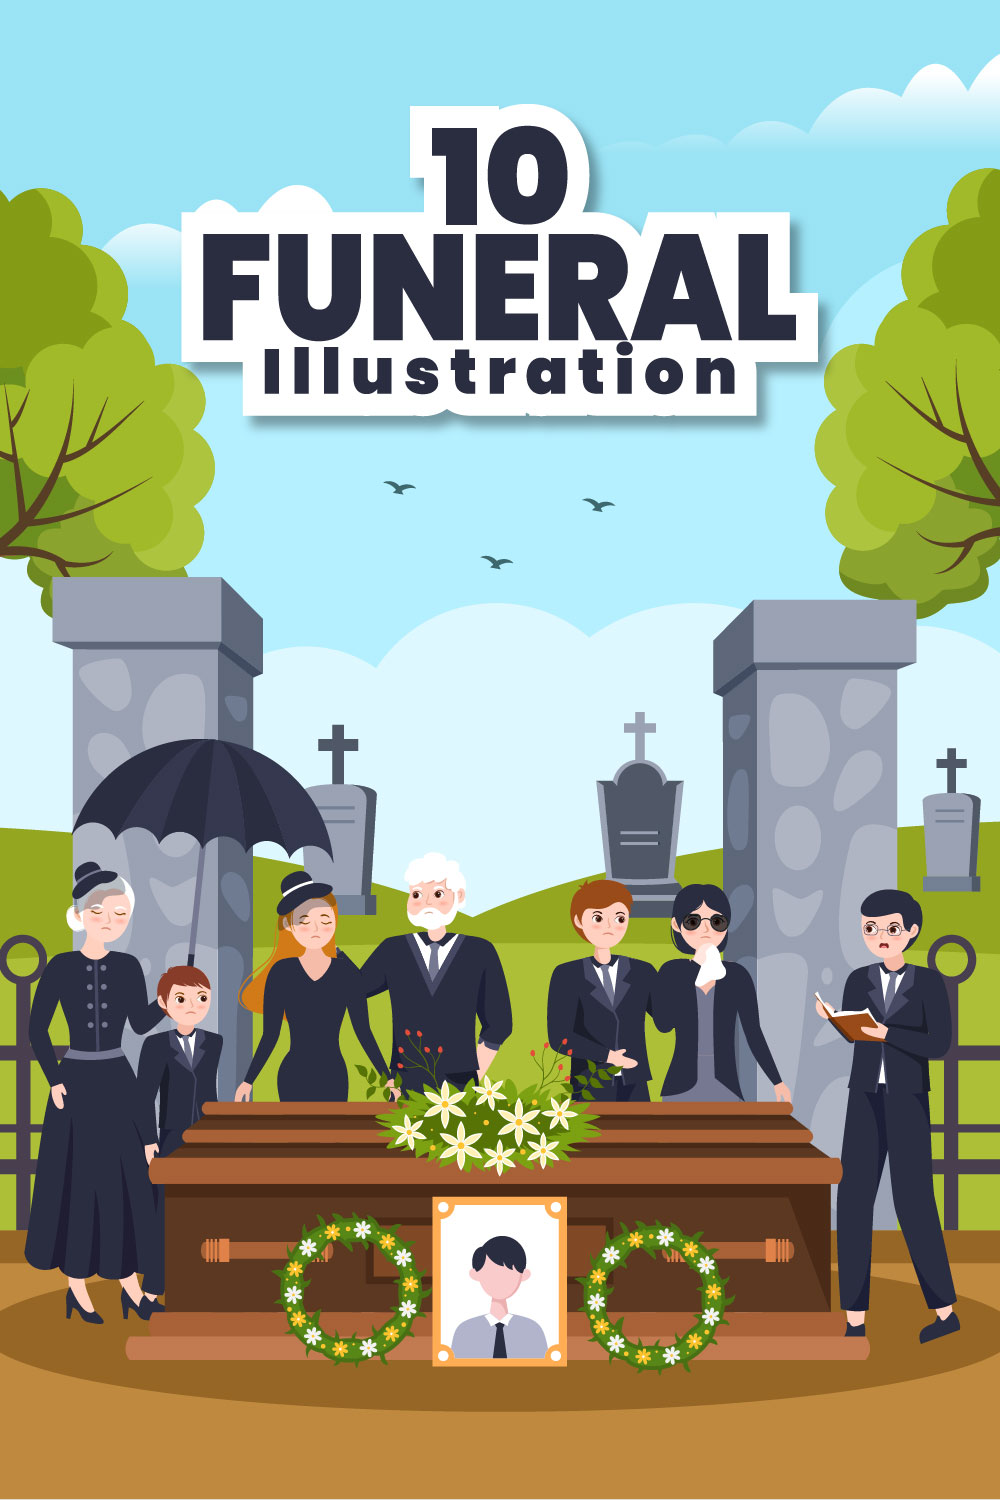 Unique cartoon image of a funeral ceremony.